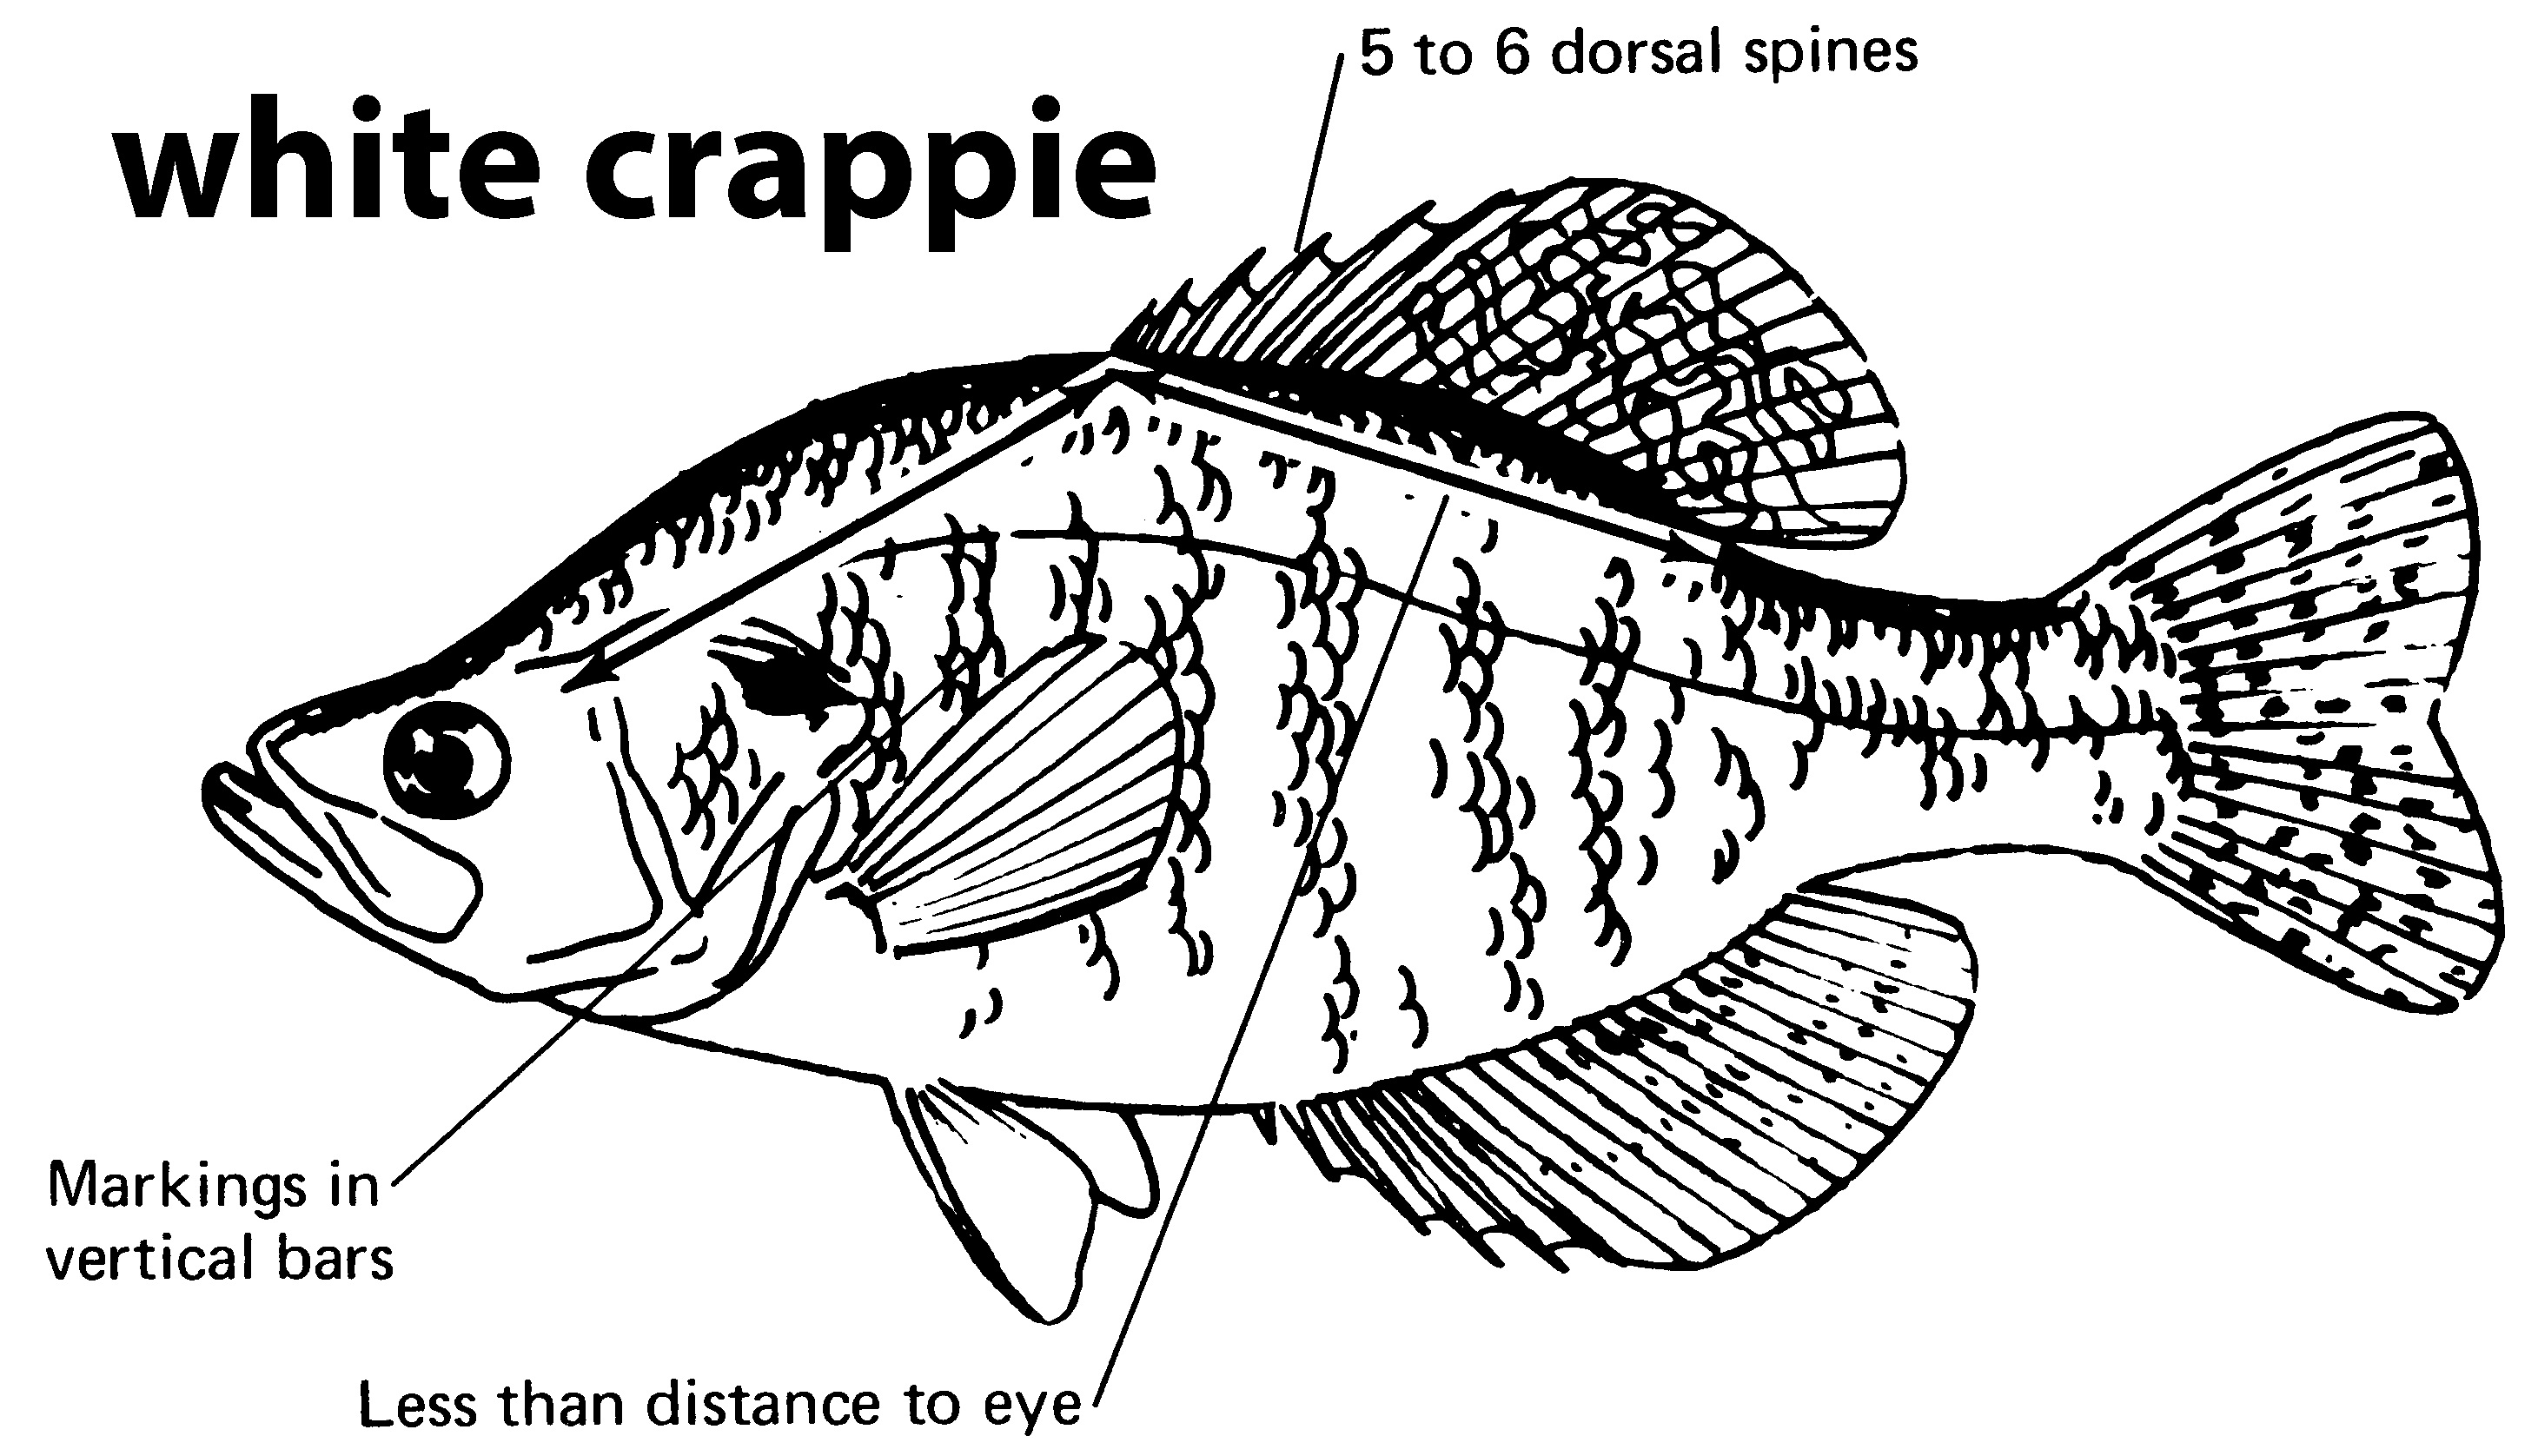 characteristics of a white crappie